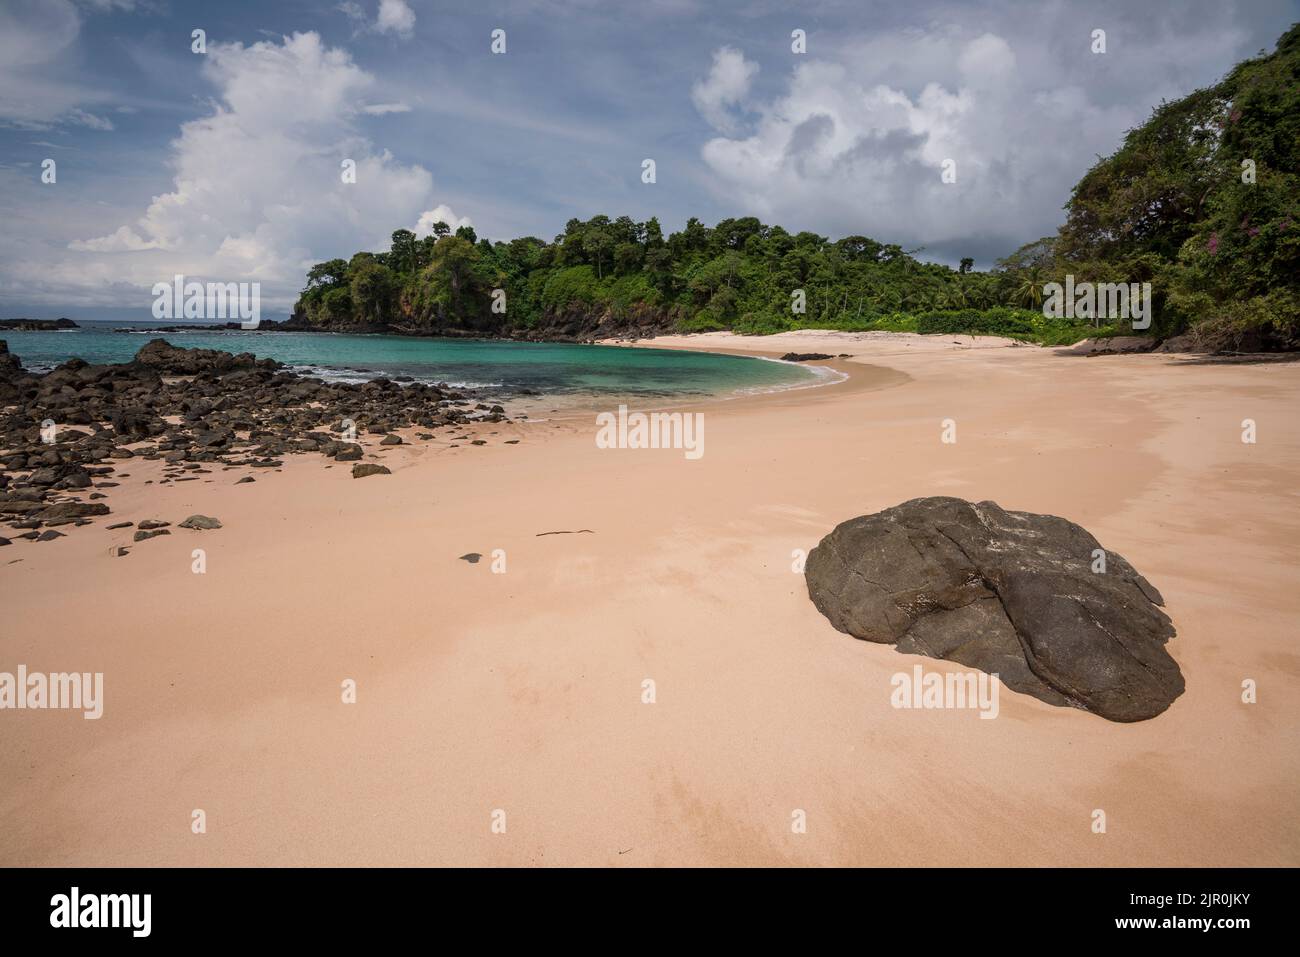 Tropical beach at low tide, Las Perlas archipelago, Panama - stock photo Stock Photo